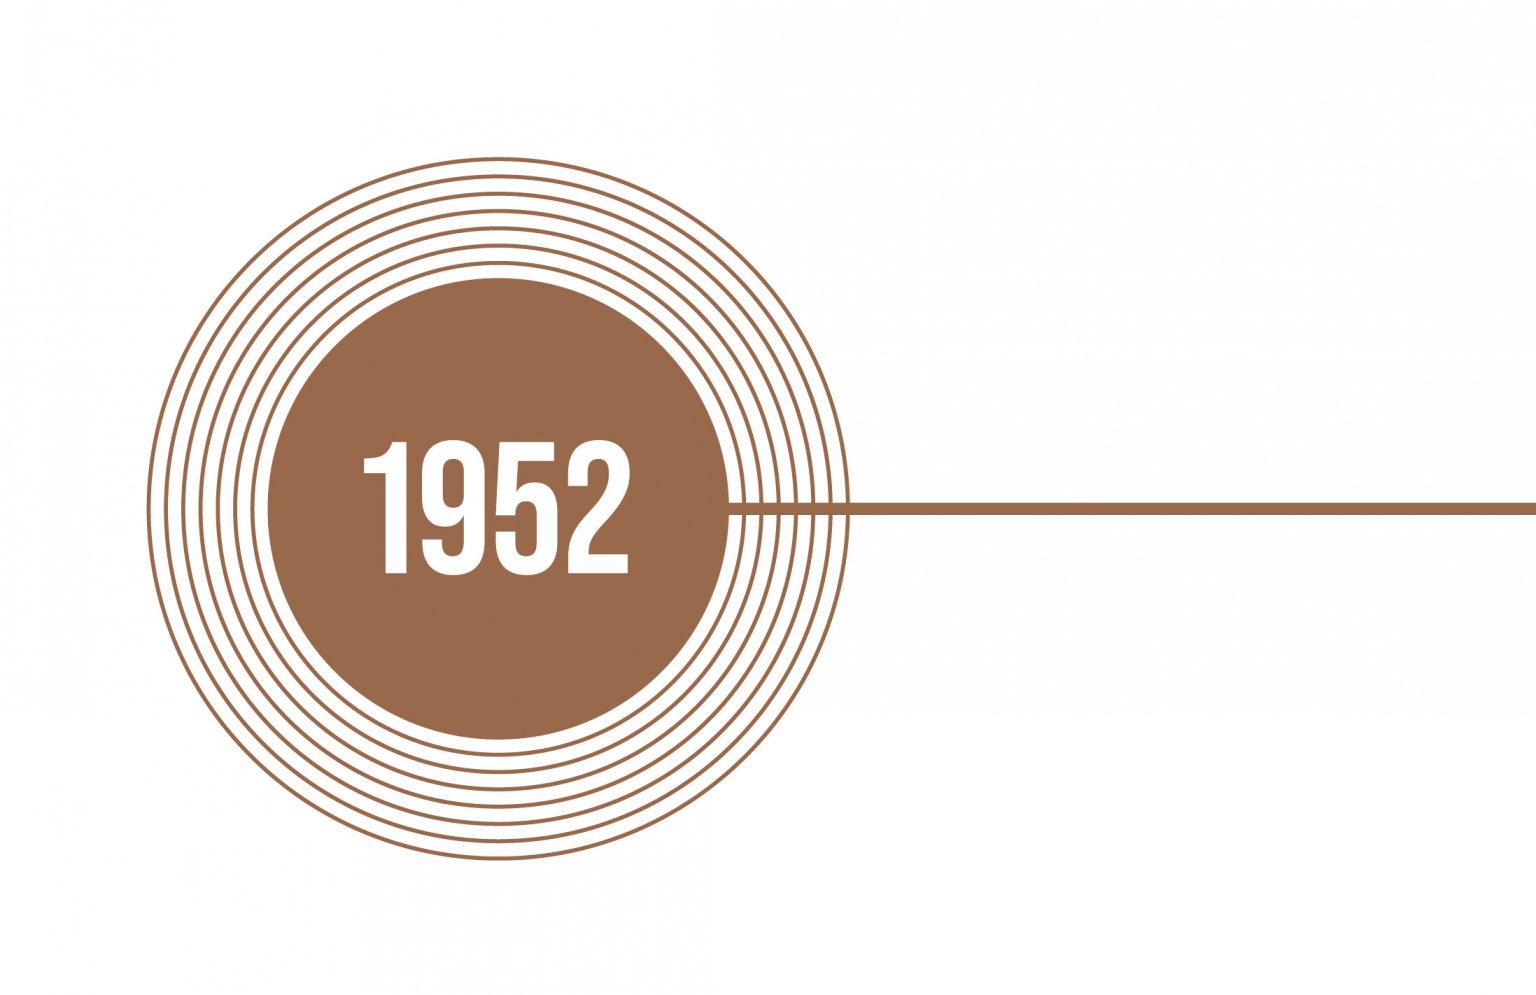 国際社会科学協議会、1952年から2018年